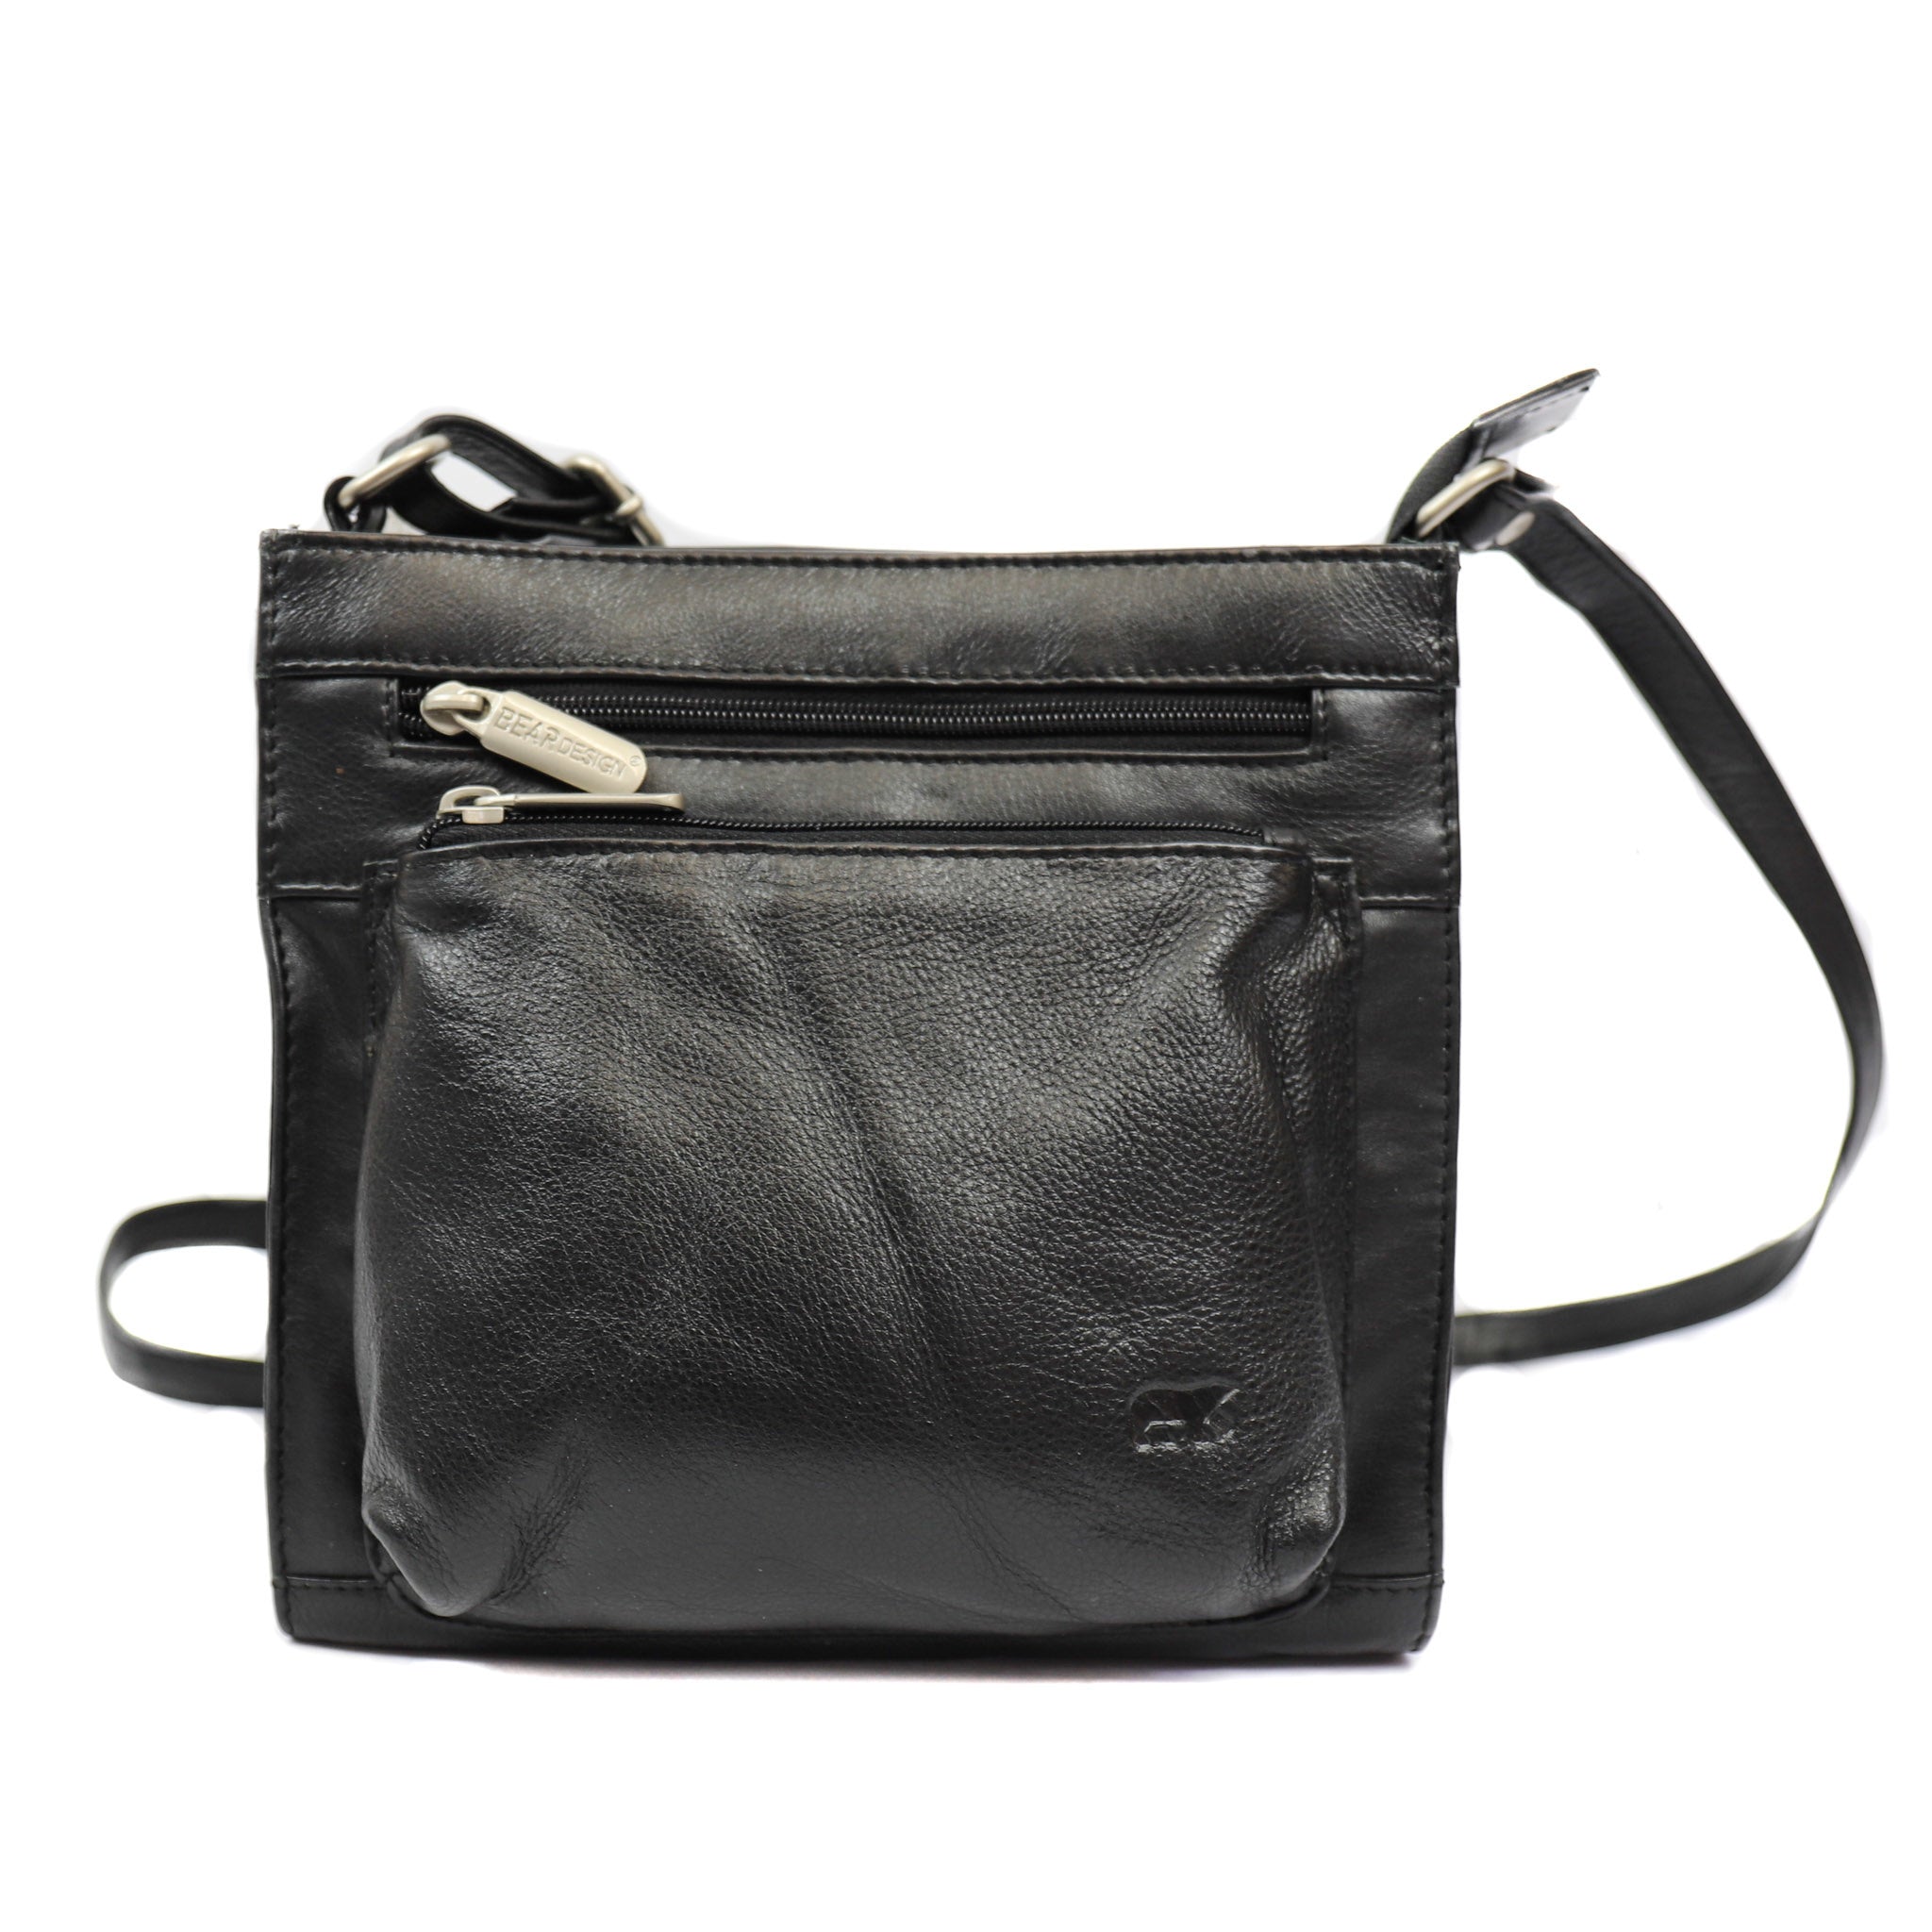 Shoulder bag 'Davita' black - B 3566